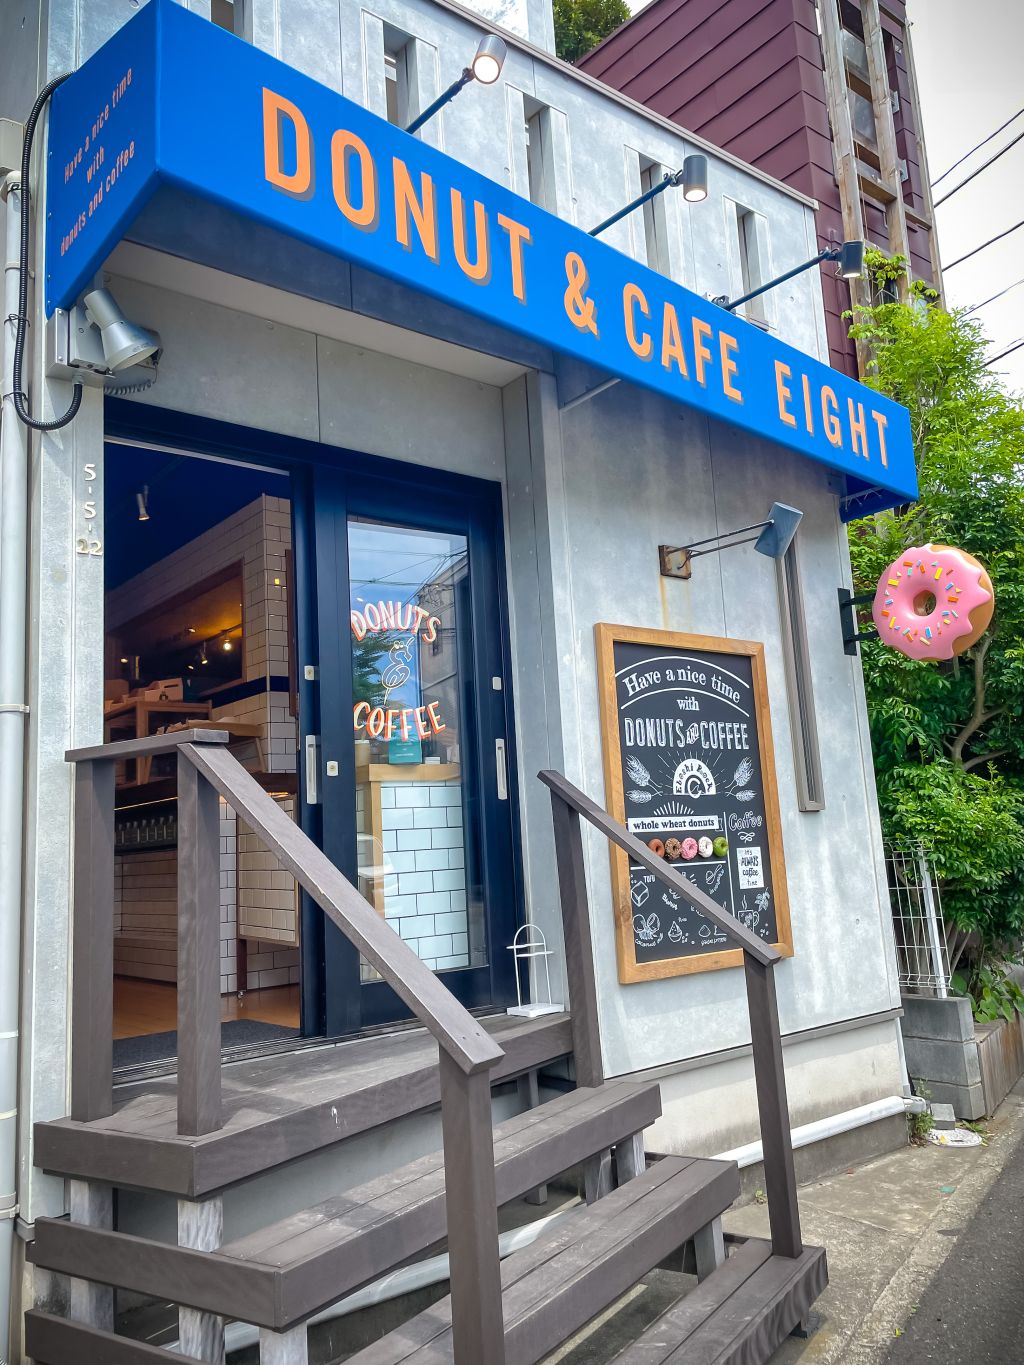 Donut & Cafe Eight